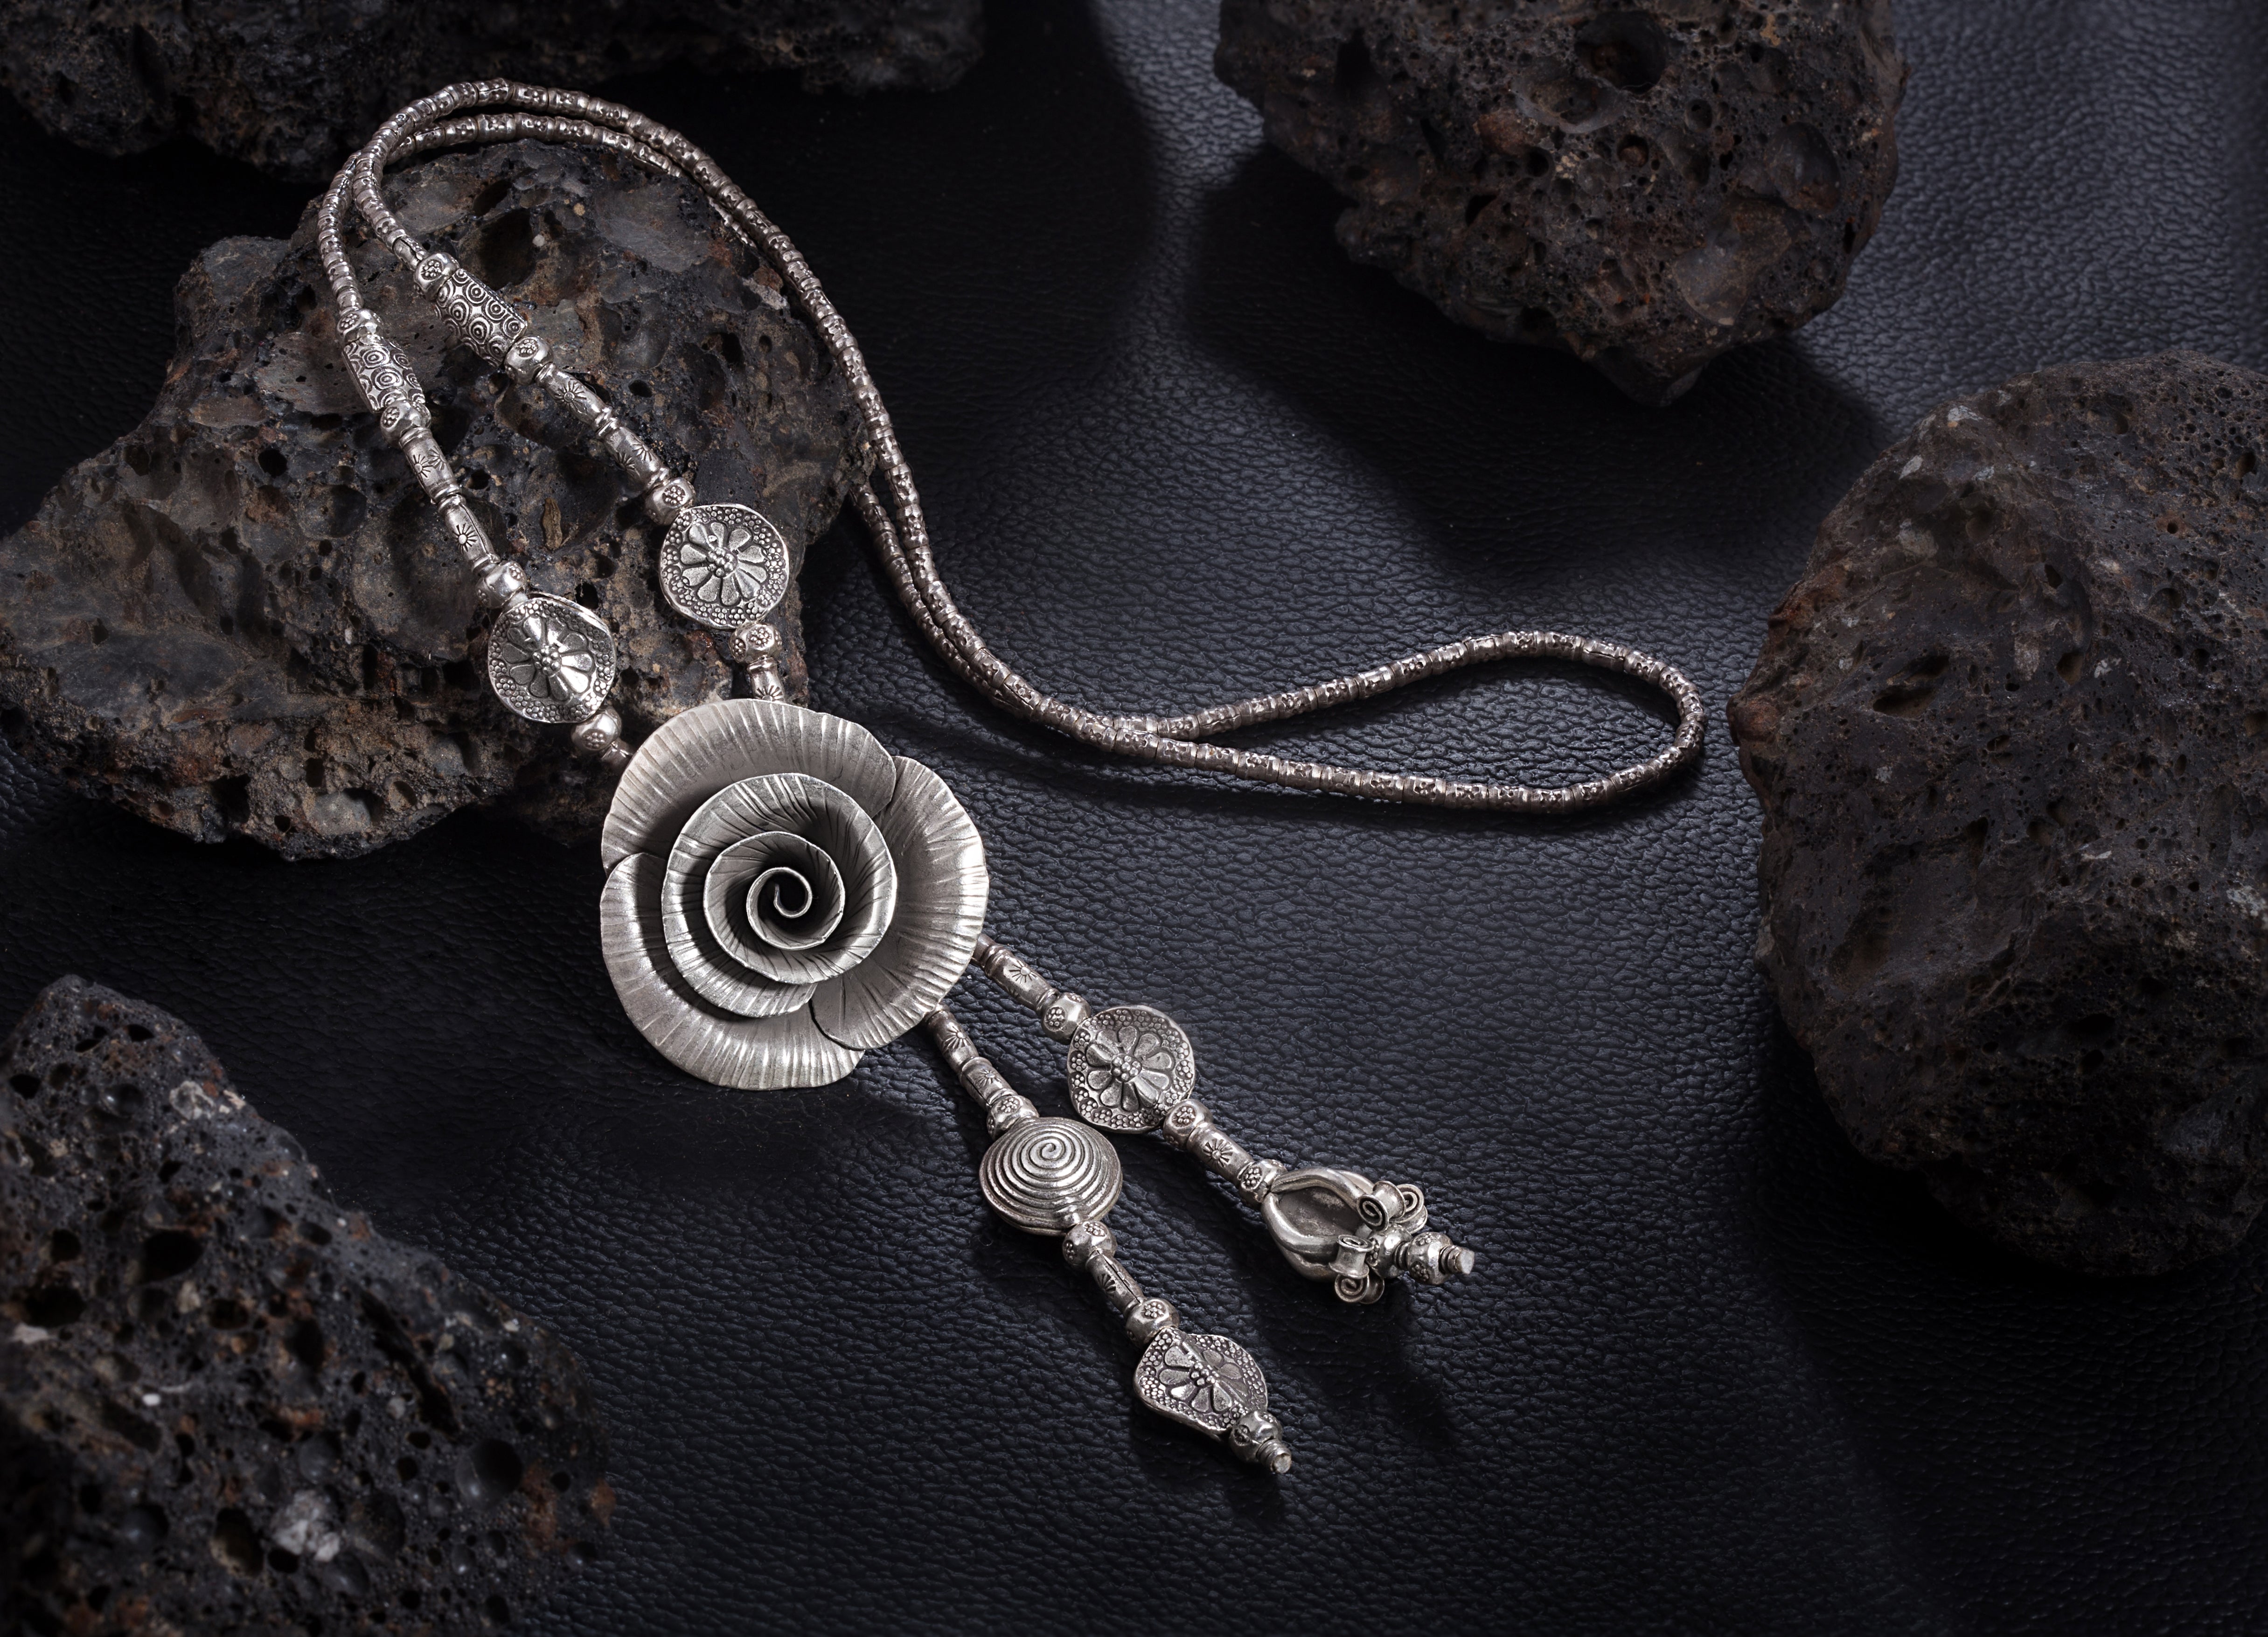 92.5 sterling silver Rose motif playful necklace in matt finish